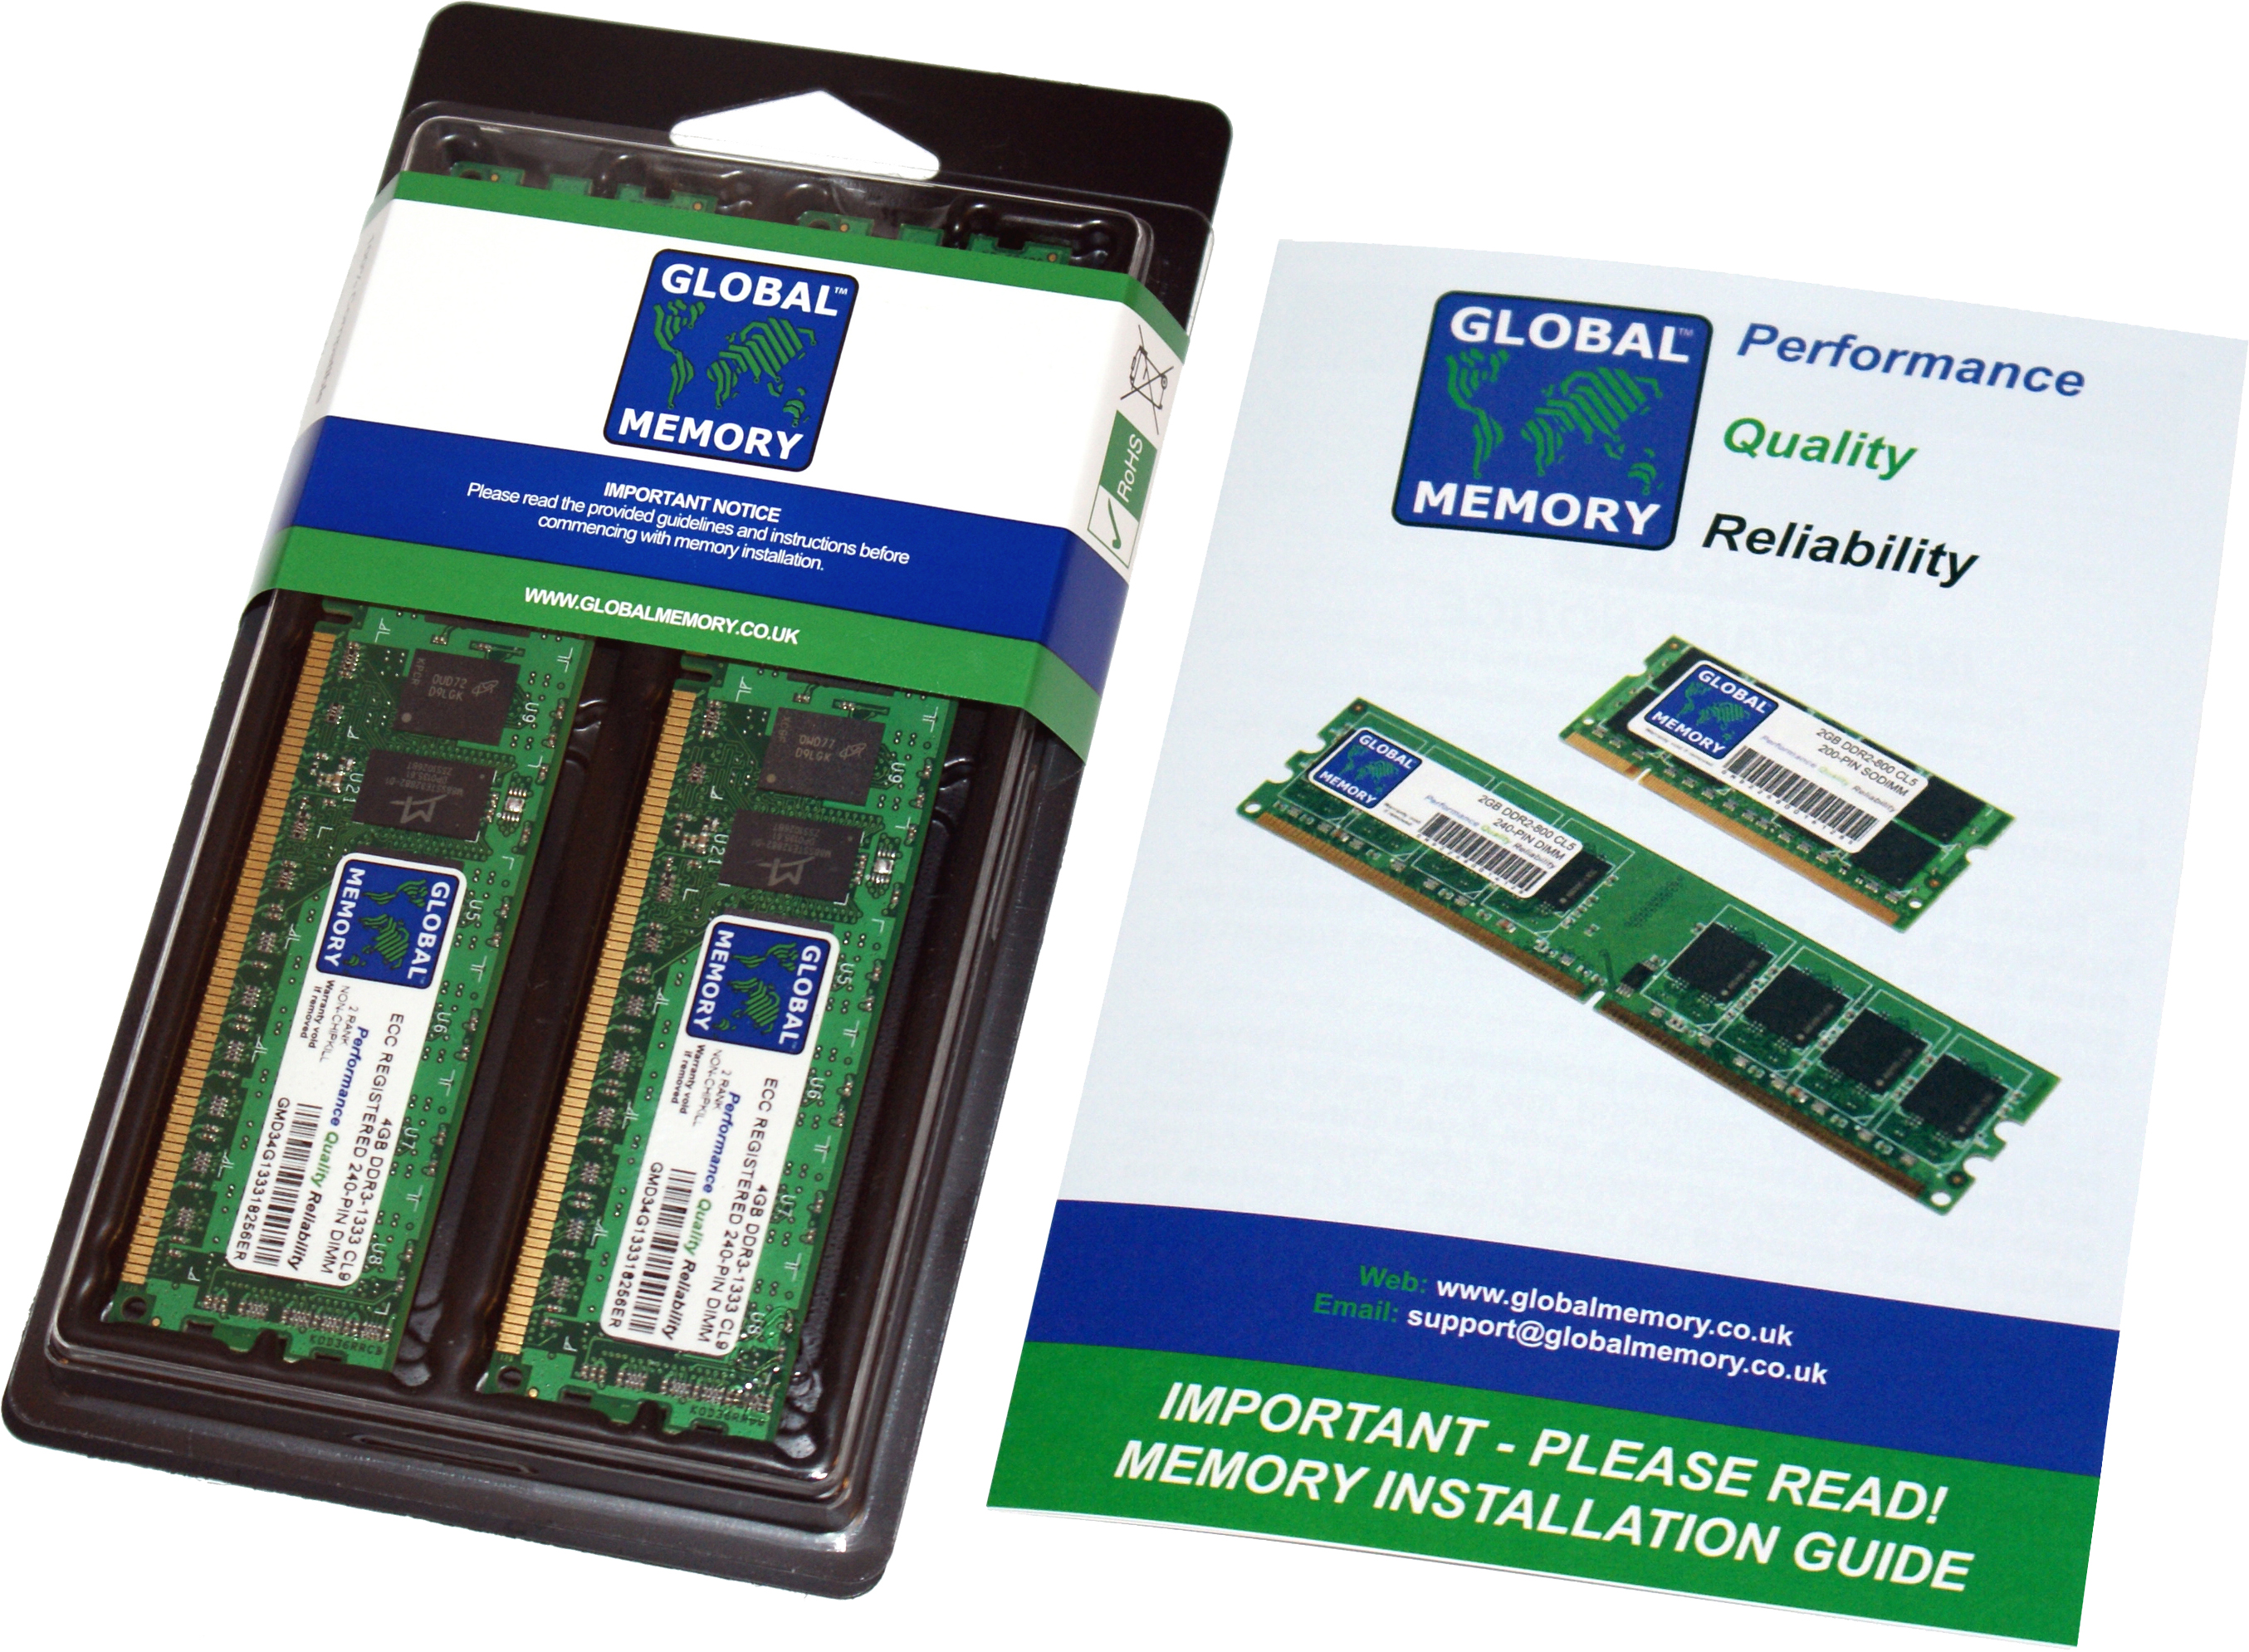 16GB (2 x 8GB) DDR4 2400MHz PC4-19200 288-PIN ECC REGISTERED DIMM (RDIMM) MEMORY RAM KIT FOR LENOVO SERVERS/WORKSTATIONS (2 RANK KIT CHIPKILL)